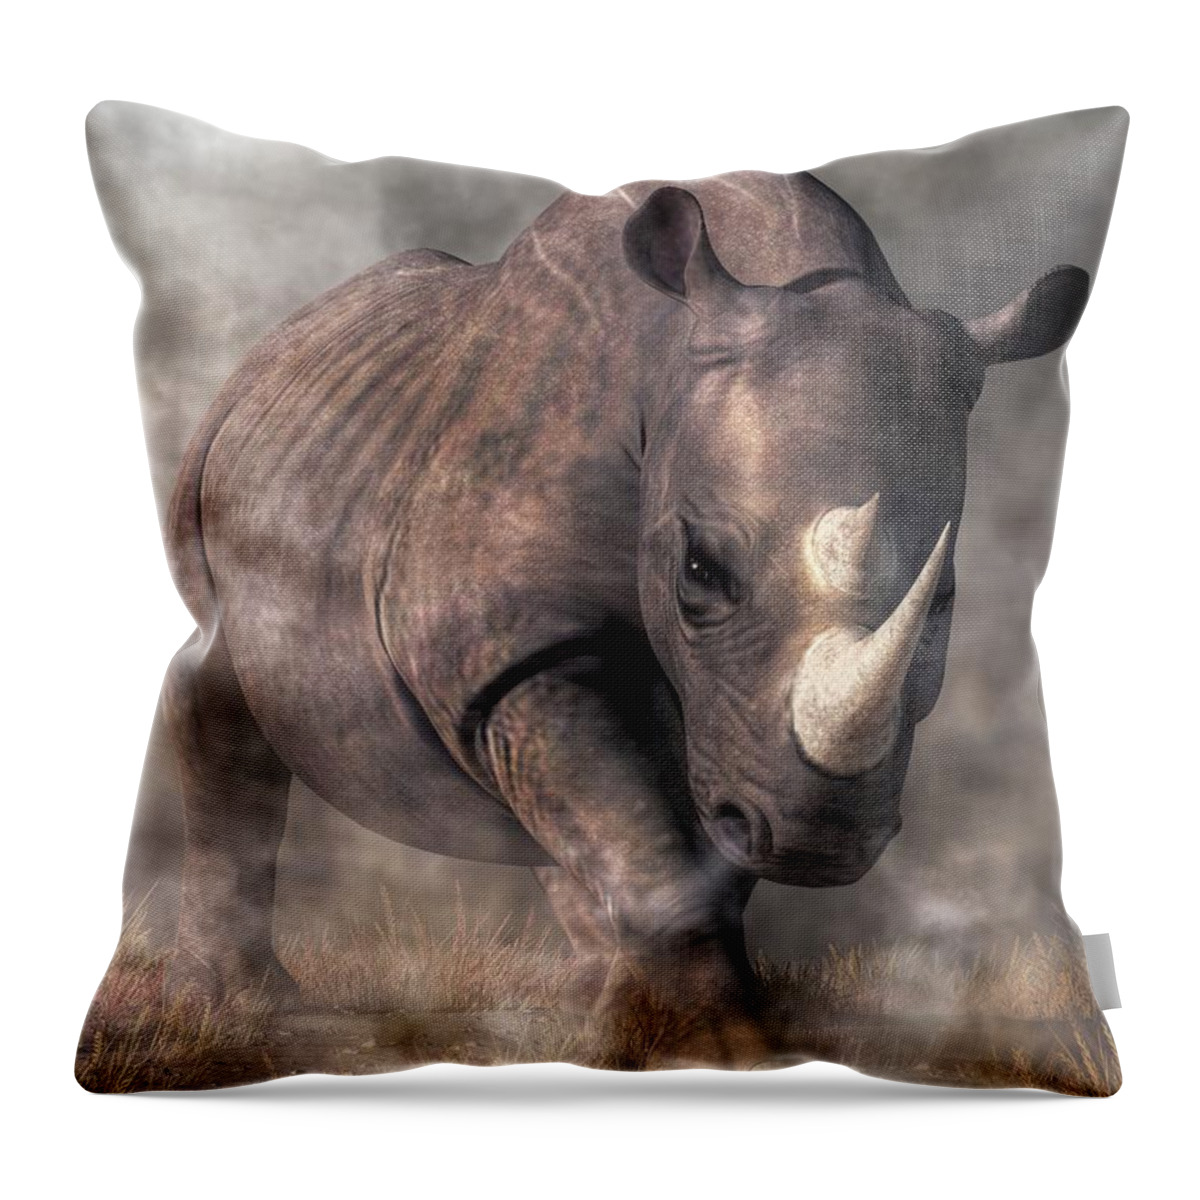 Angry Rhino Throw Pillow featuring the digital art Angry Rhino by Daniel Eskridge